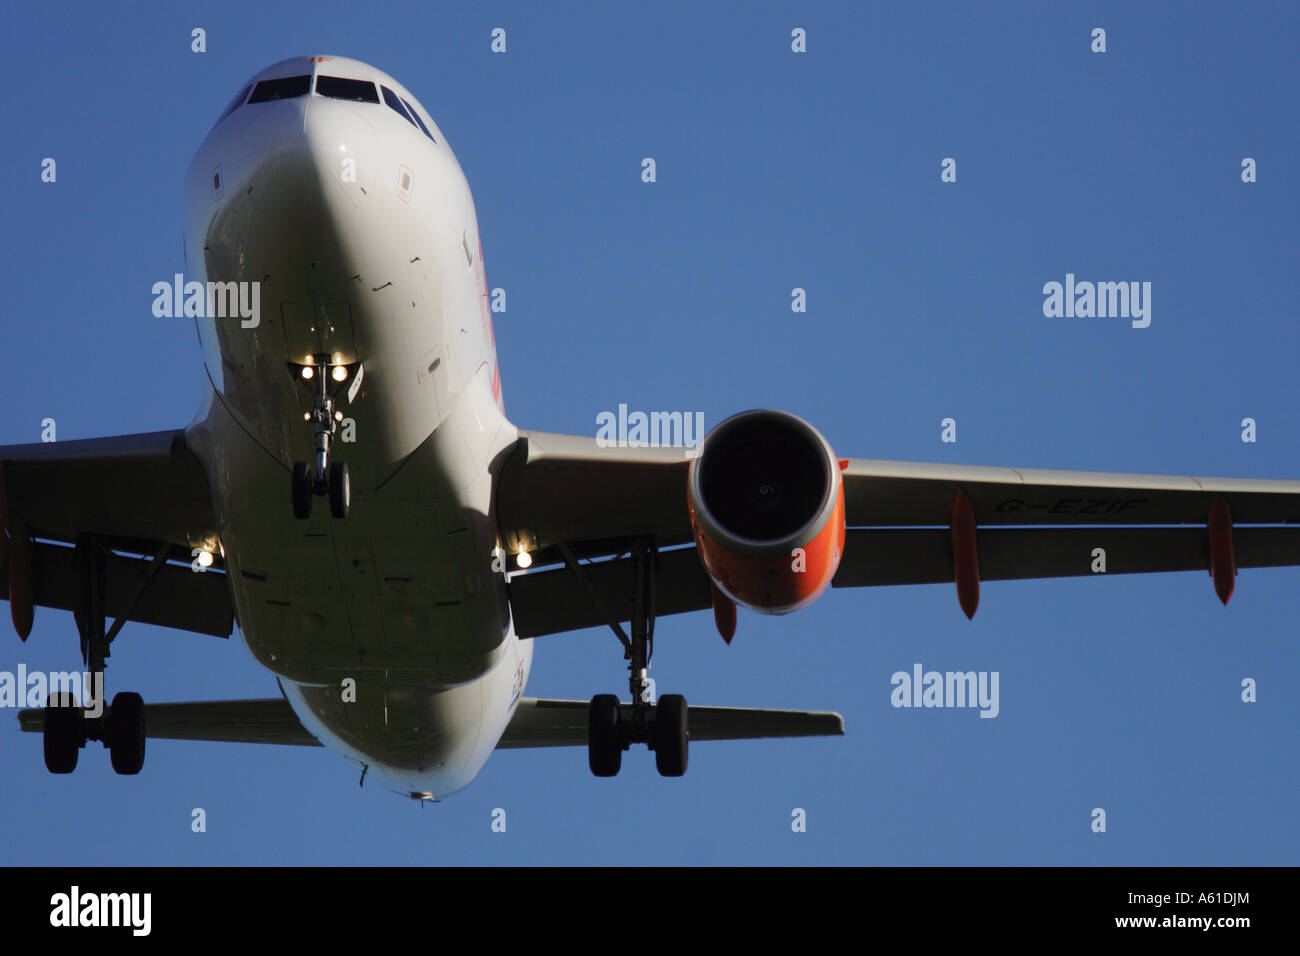 Düsenverkehrsflugzeug im Endanflug zu landen Stockfoto